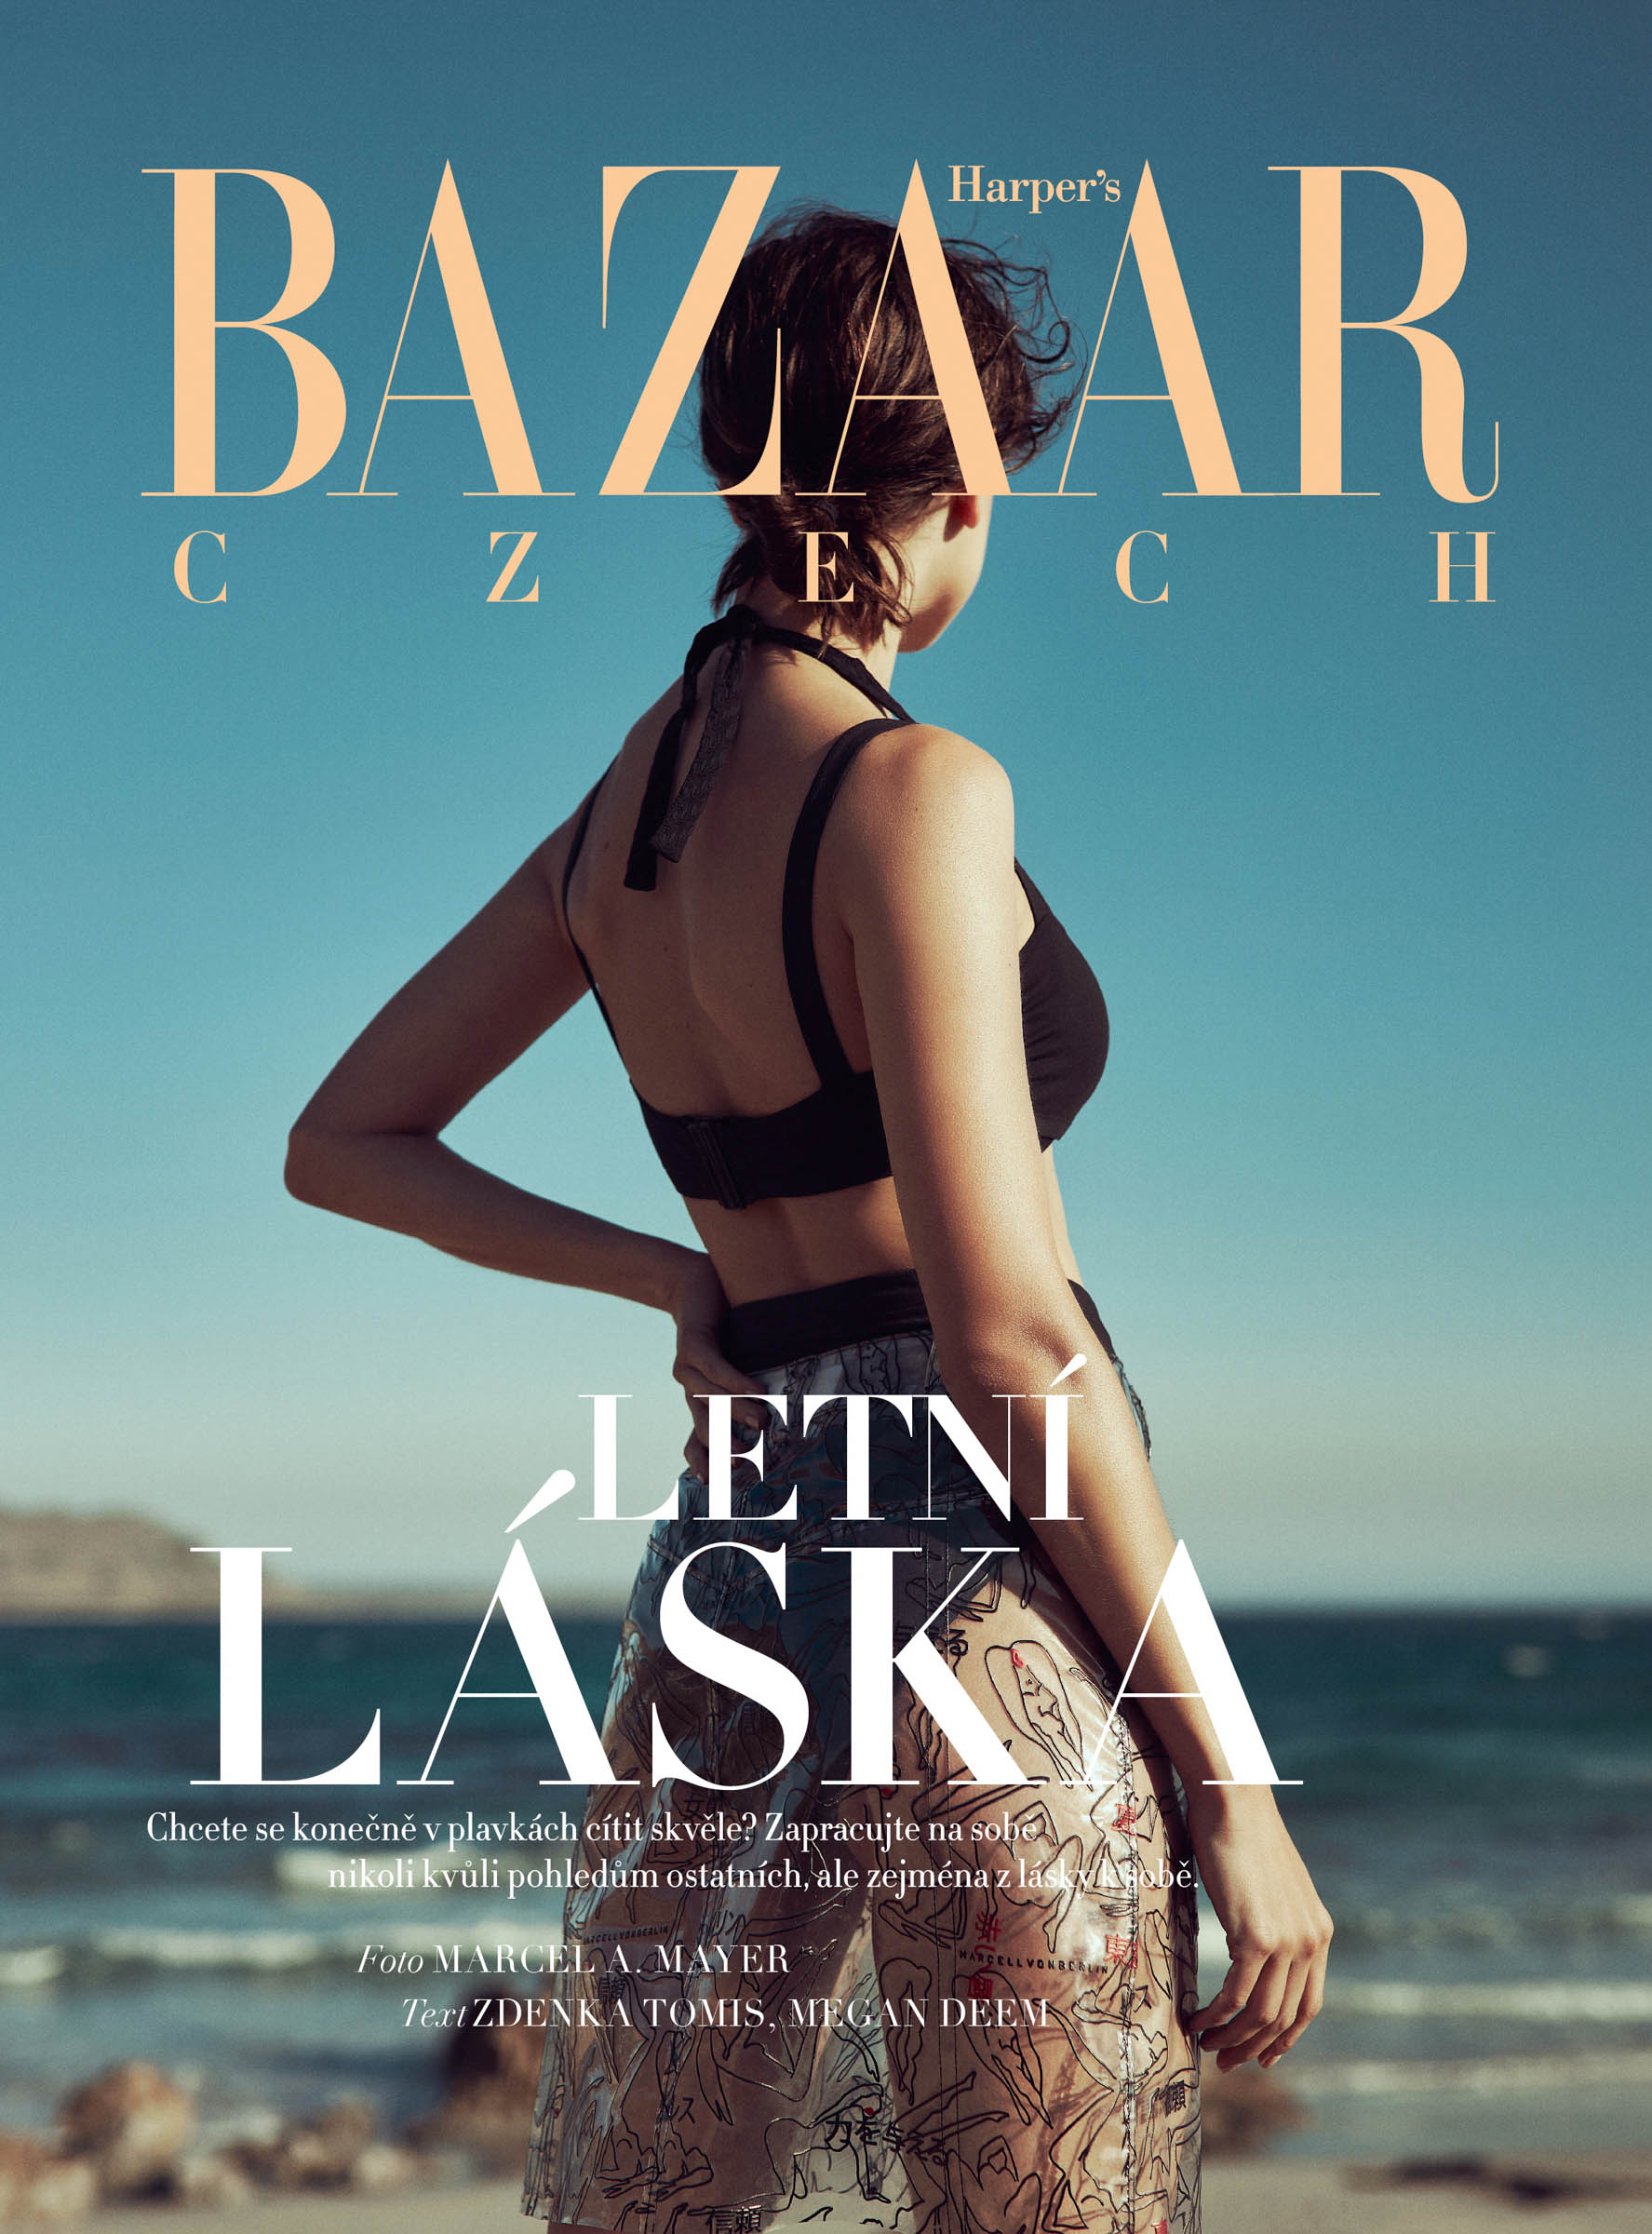 Harper's Bazaar czech Fashion magazin cover